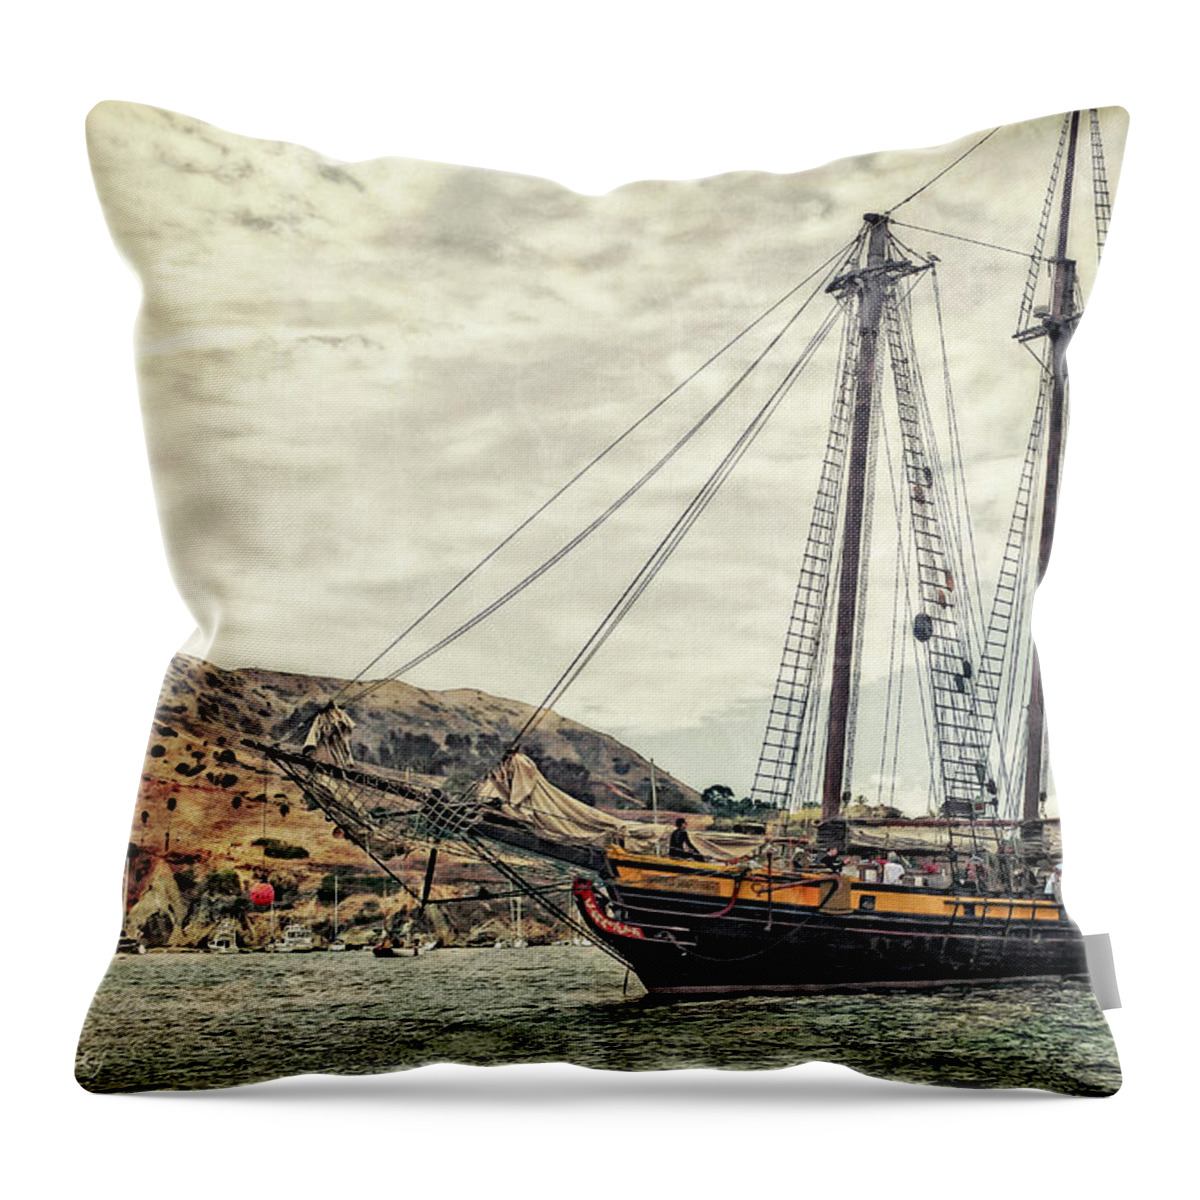 Boat Throw Pillow featuring the photograph The Spirit of Dana Point by Gabriele Pomykaj